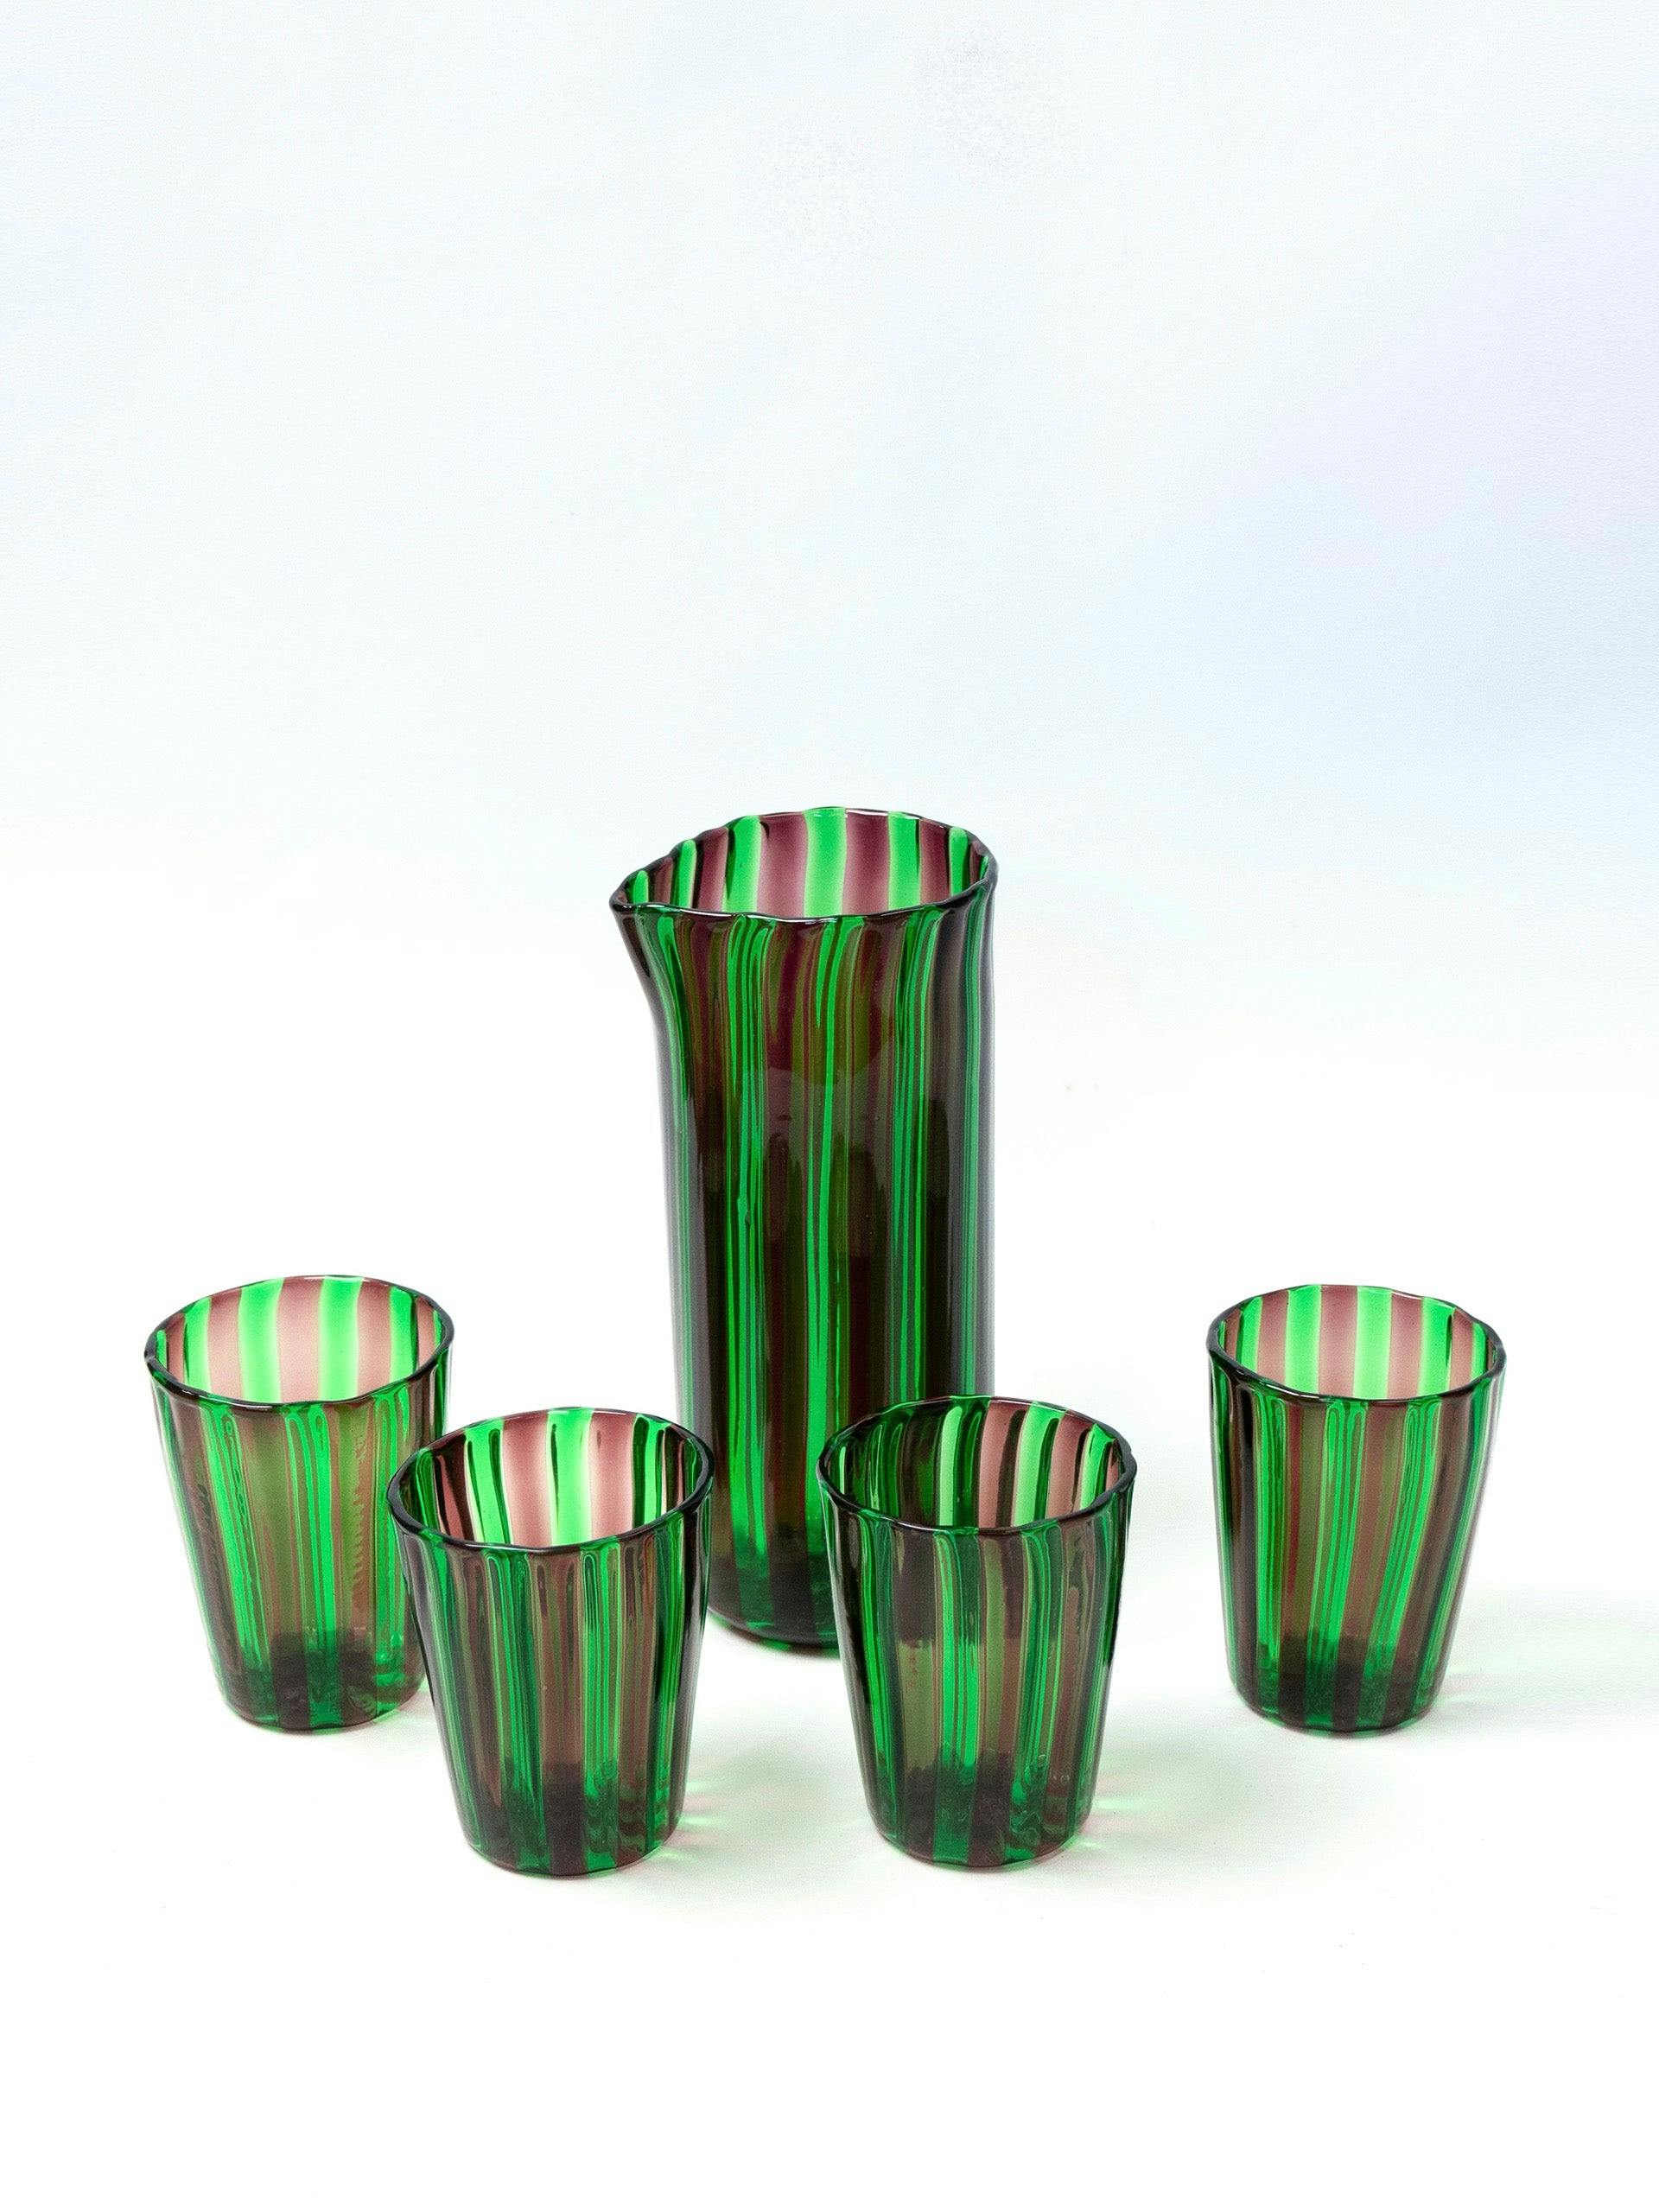 Green striped glass carafe